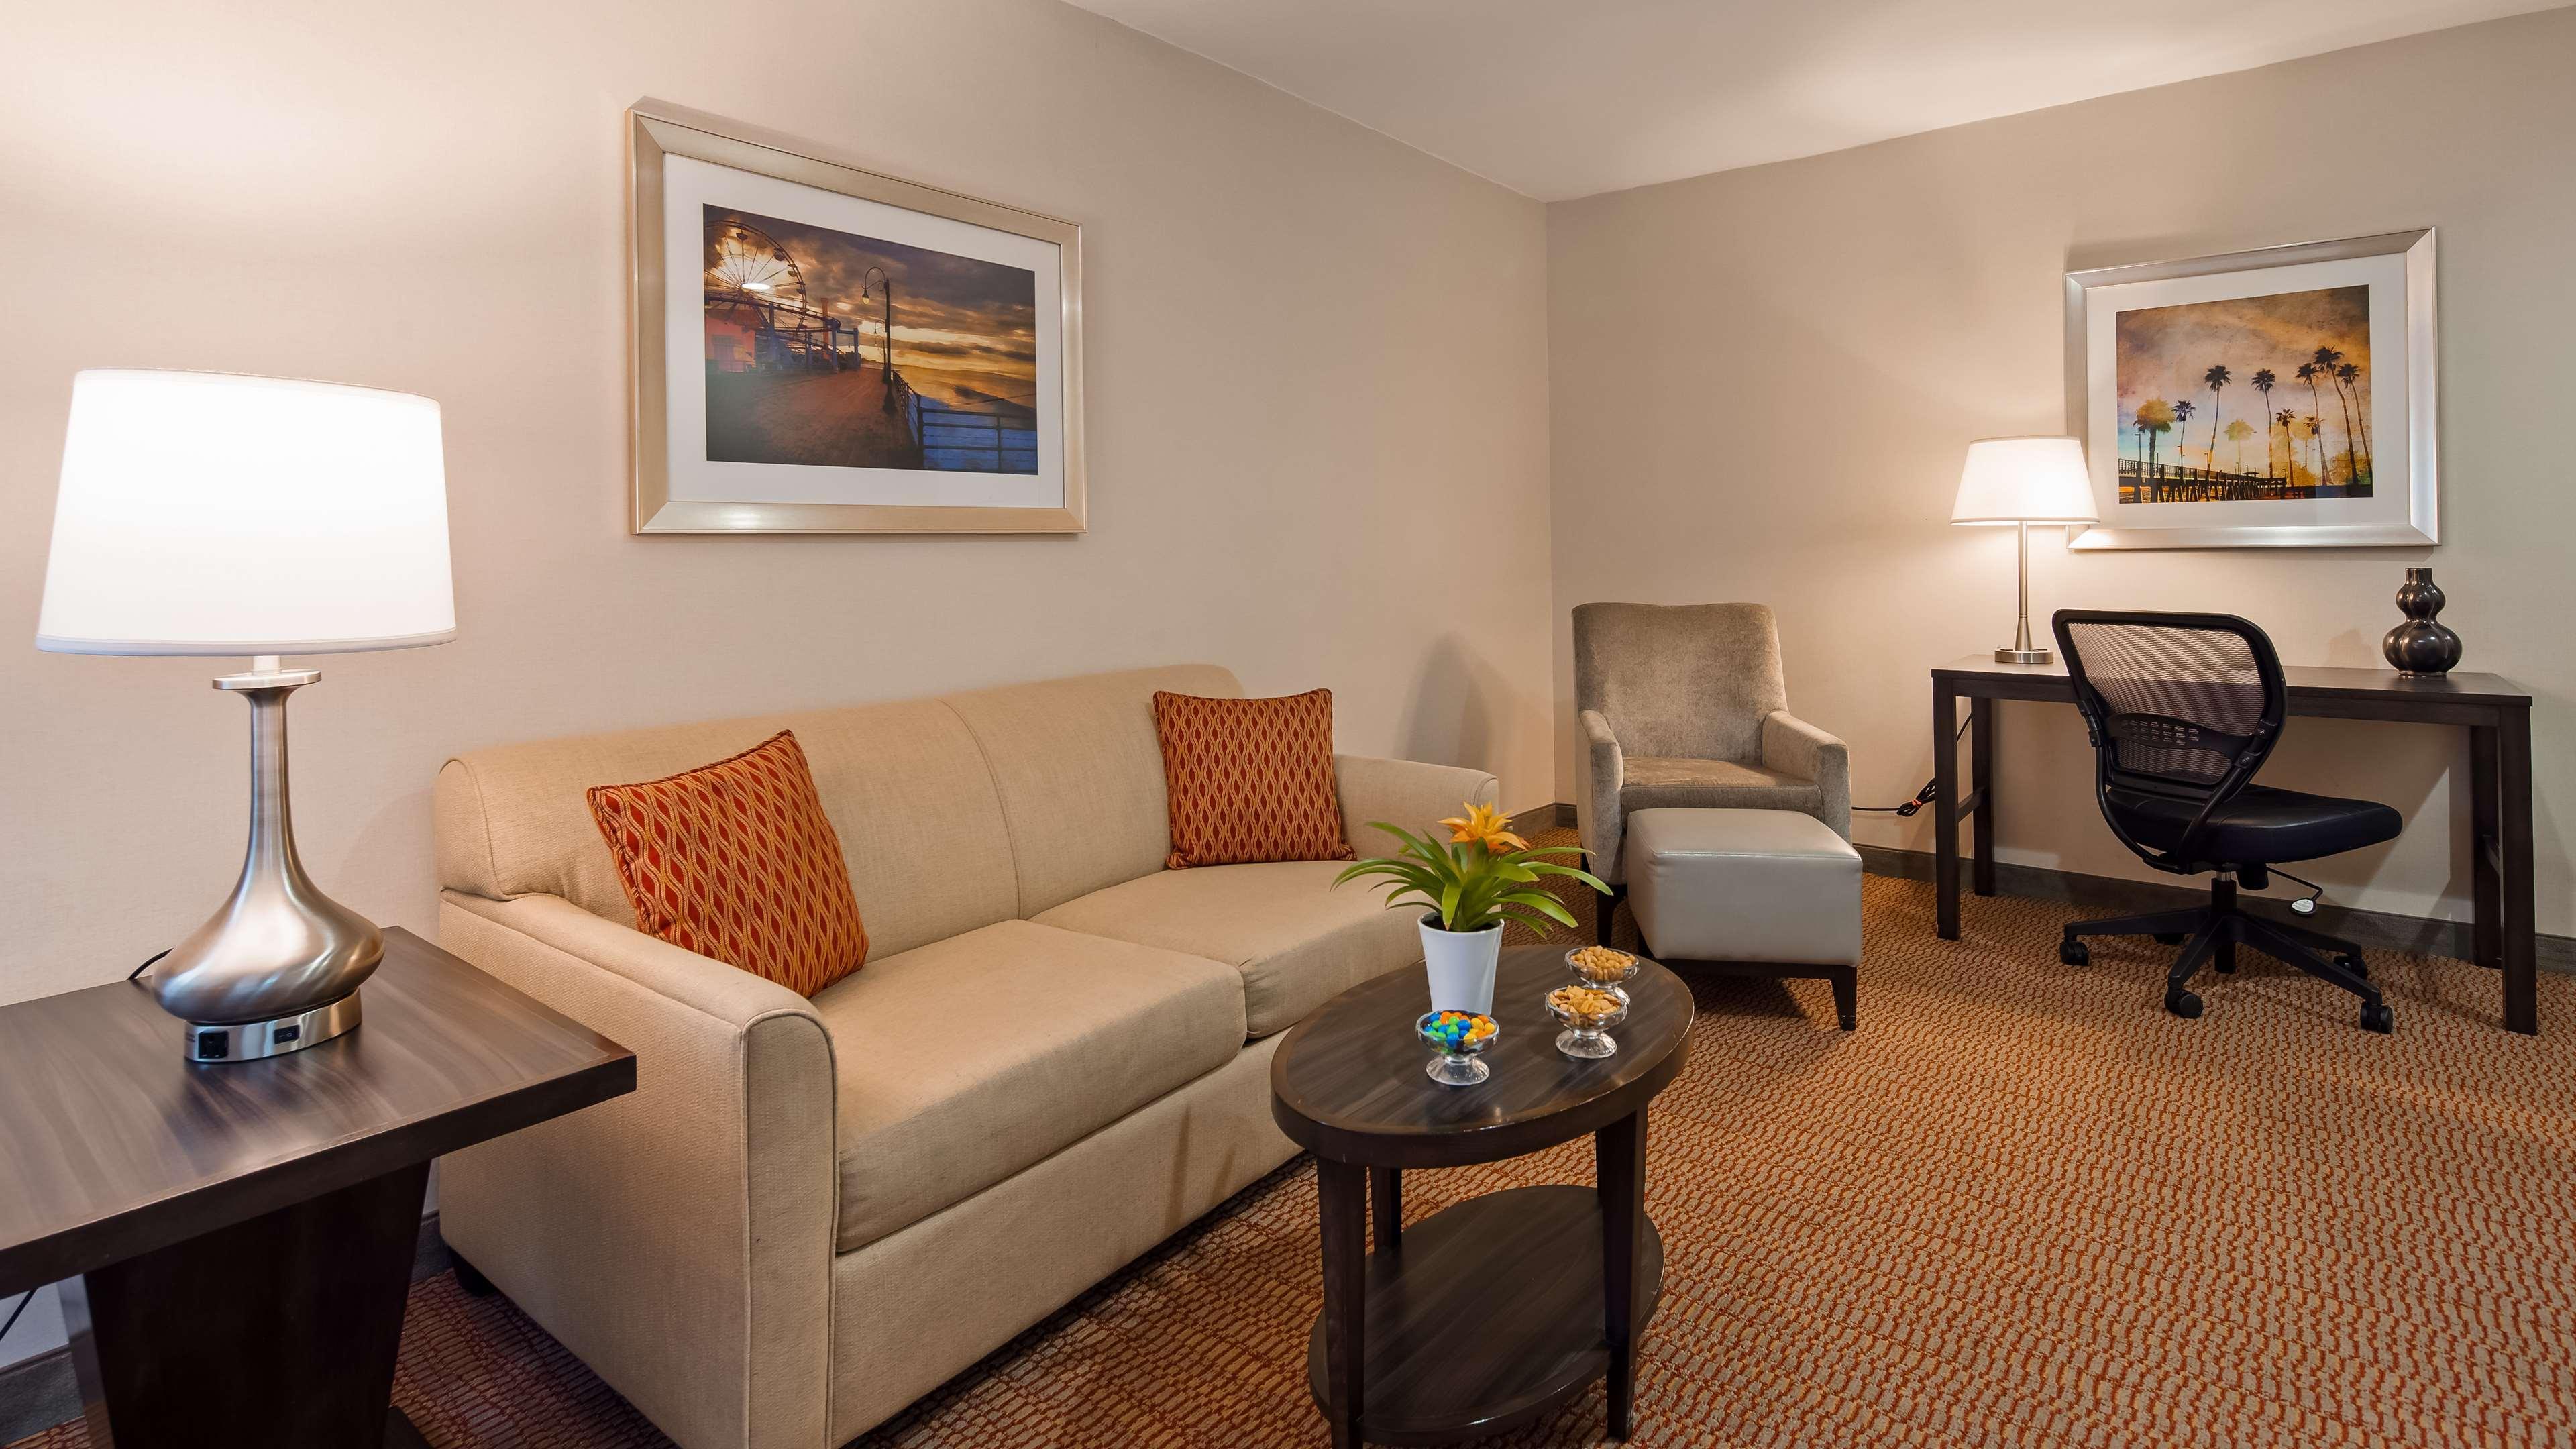 Best Western Royal Palace Inn & Suites Los Angeles Zewnętrze zdjęcie